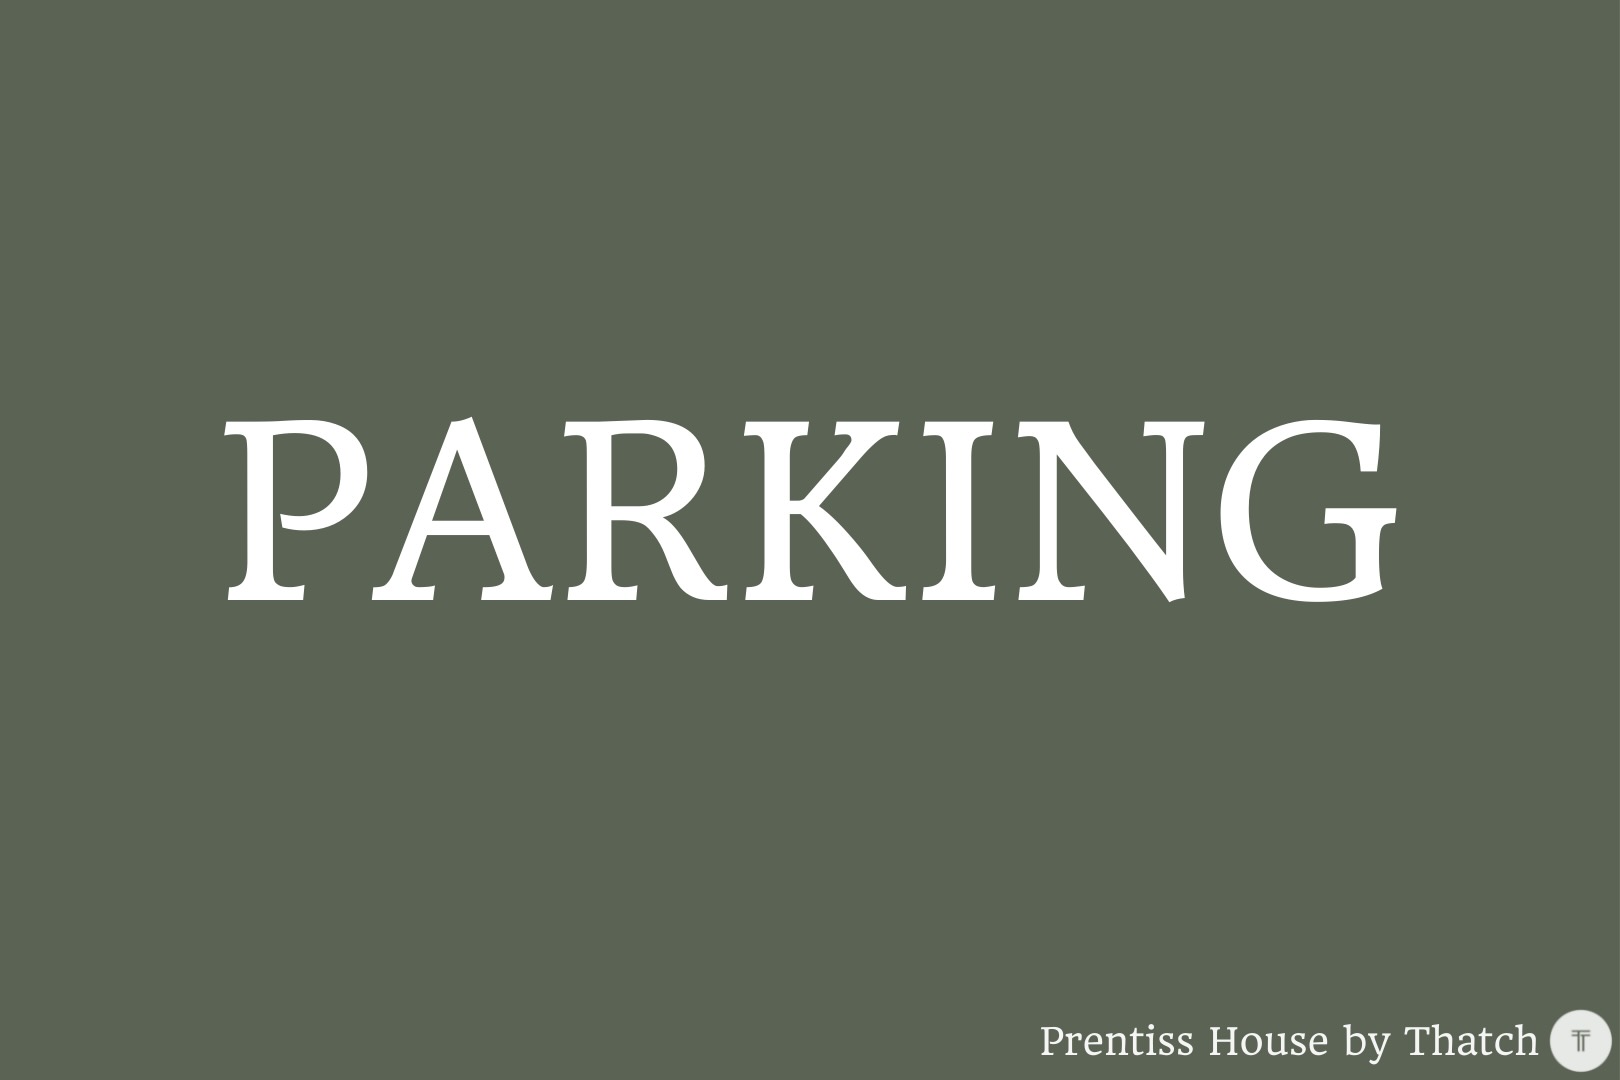 Cambridge, Prentiss House - #4 Parking | Compact